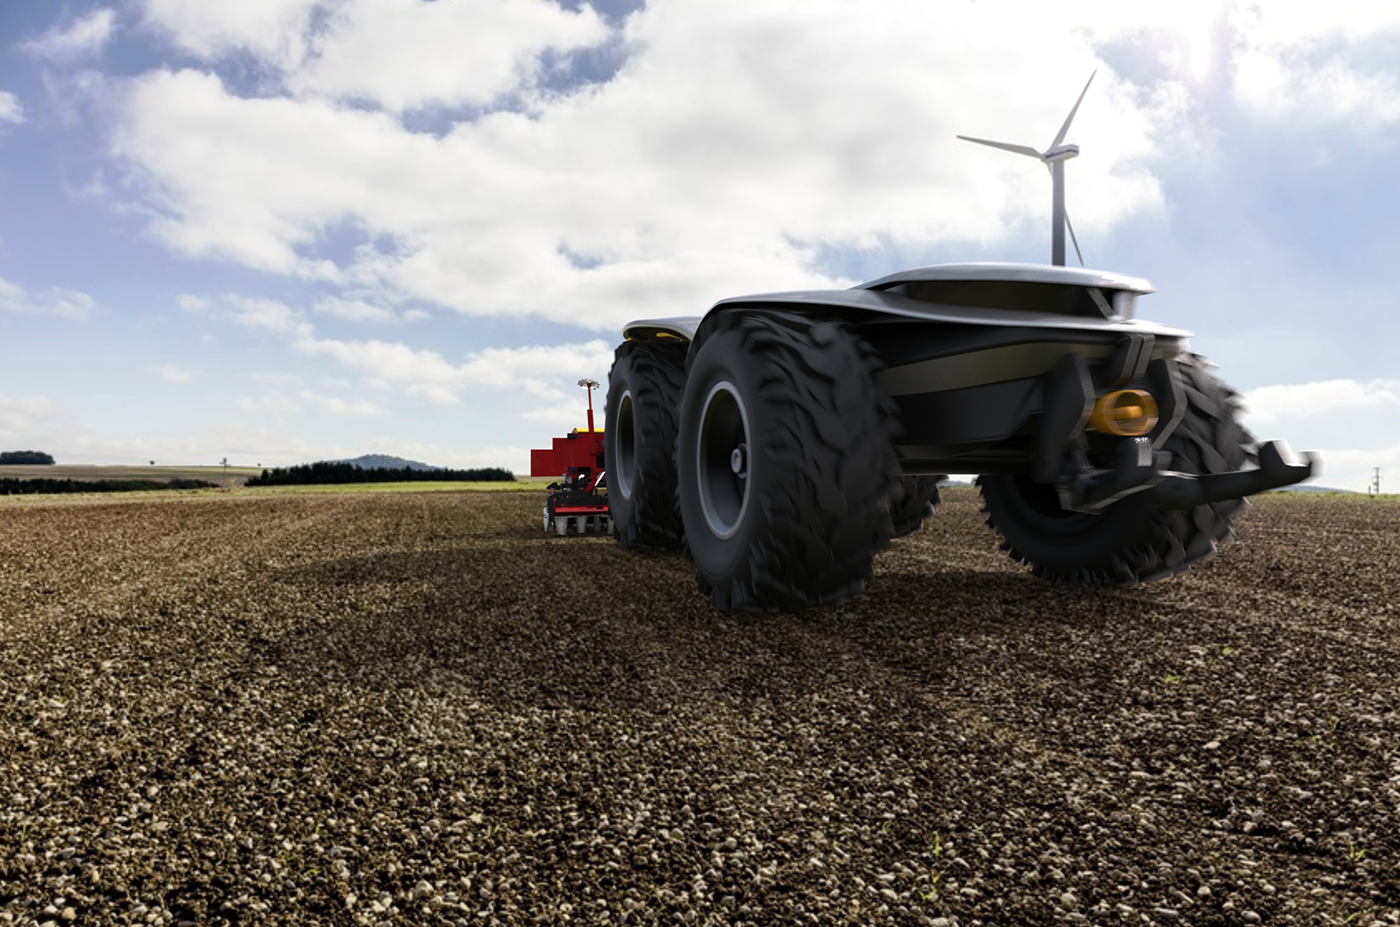 valtra design challenge Tractor farming concept Autonomous Alias industrial design 